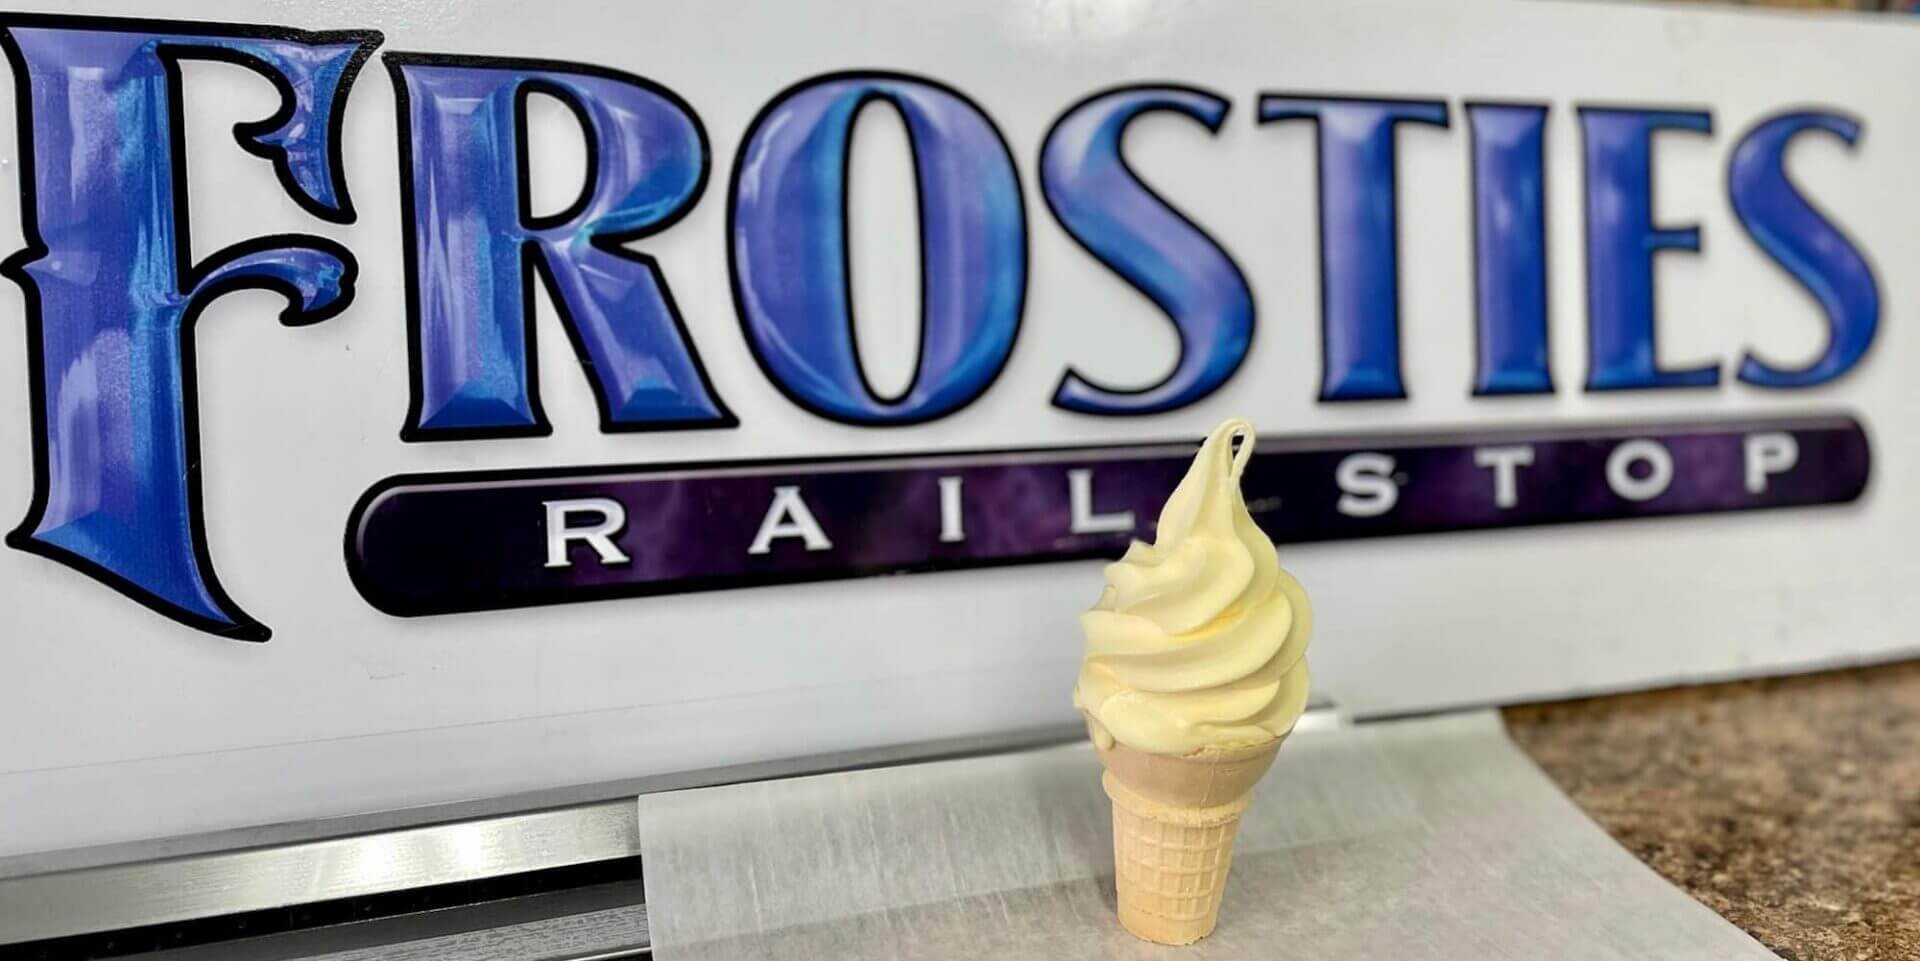 Frosties Rail Stop logo background